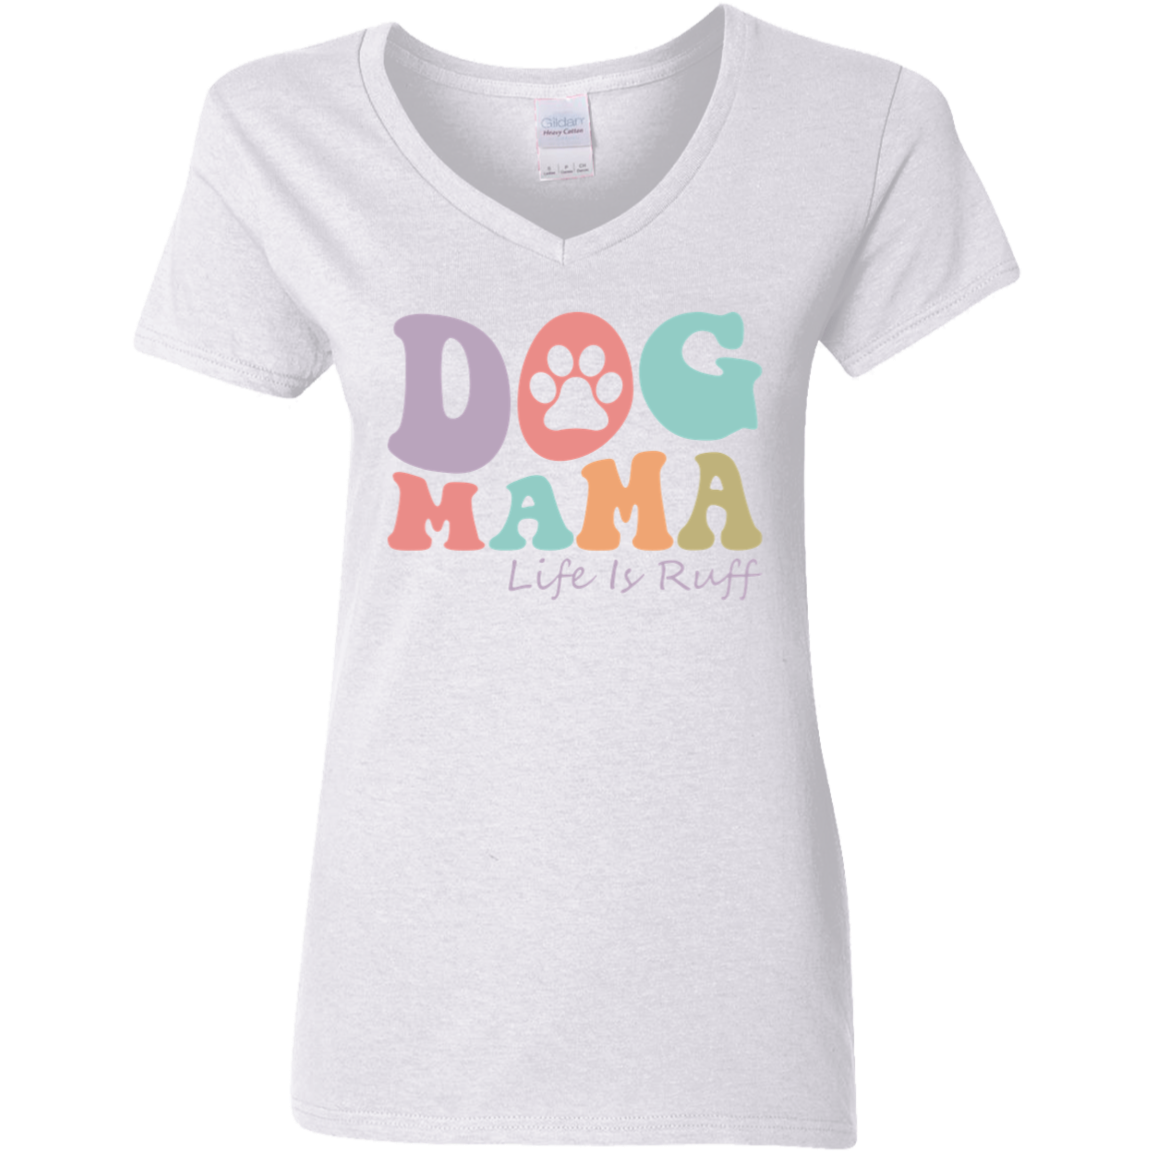 Dog Mama Life is Ruff Rescue Ladies' V-Neck T-Shirt